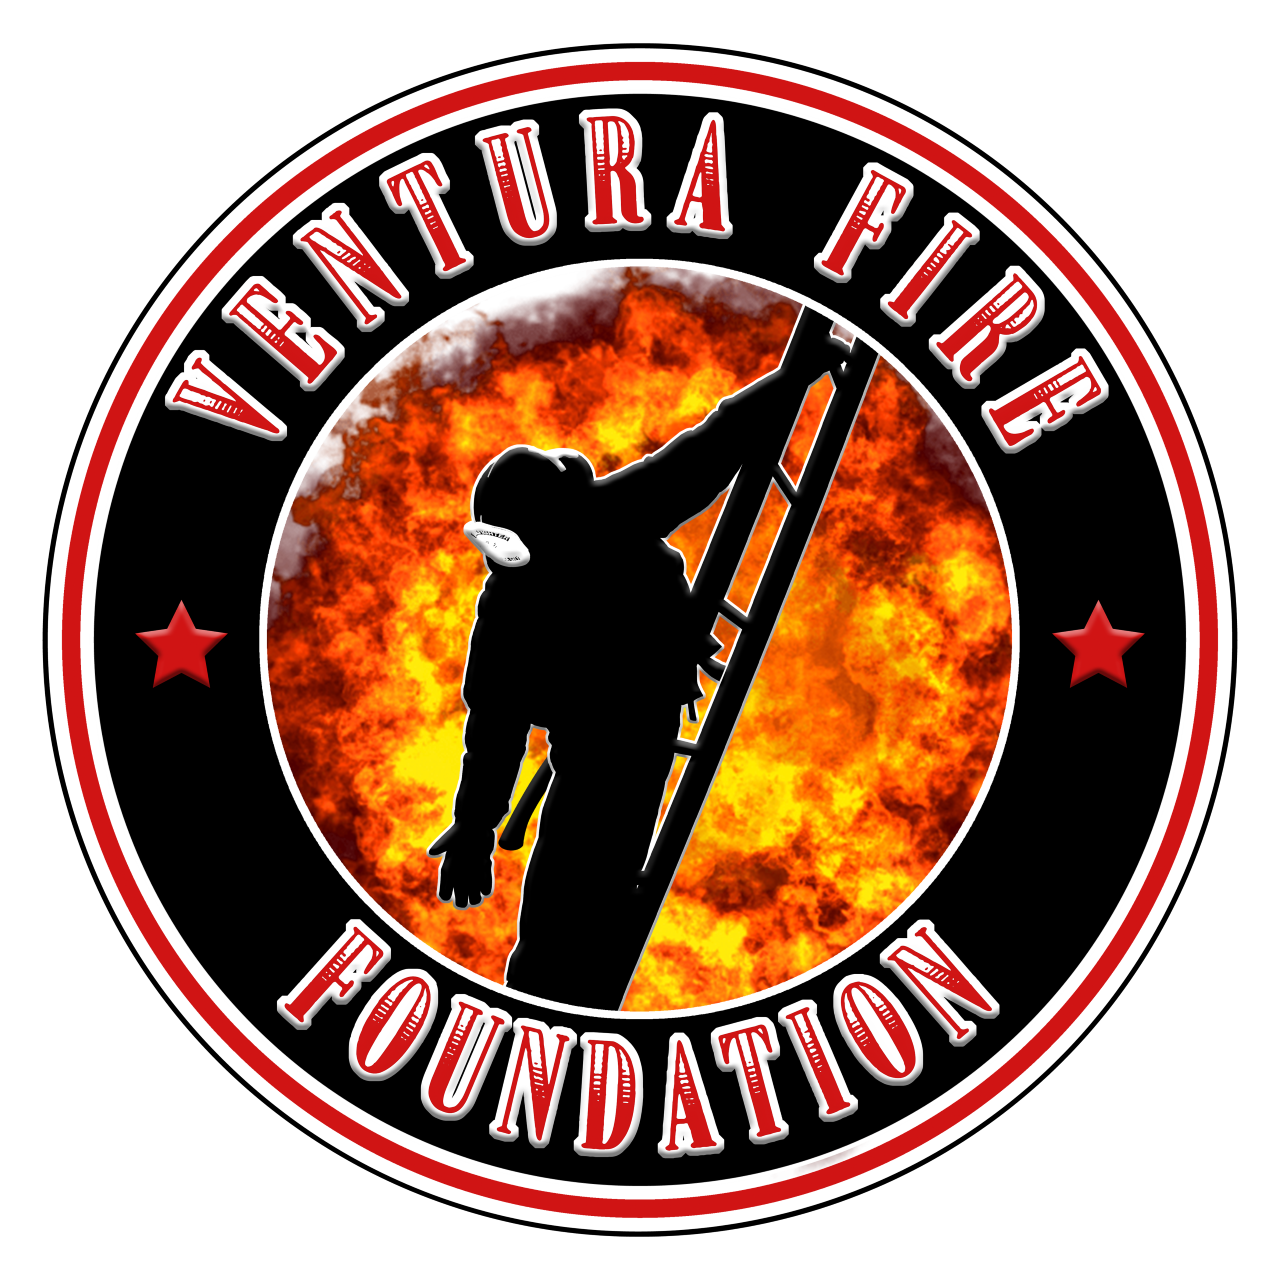 Ventura Fire Foundation